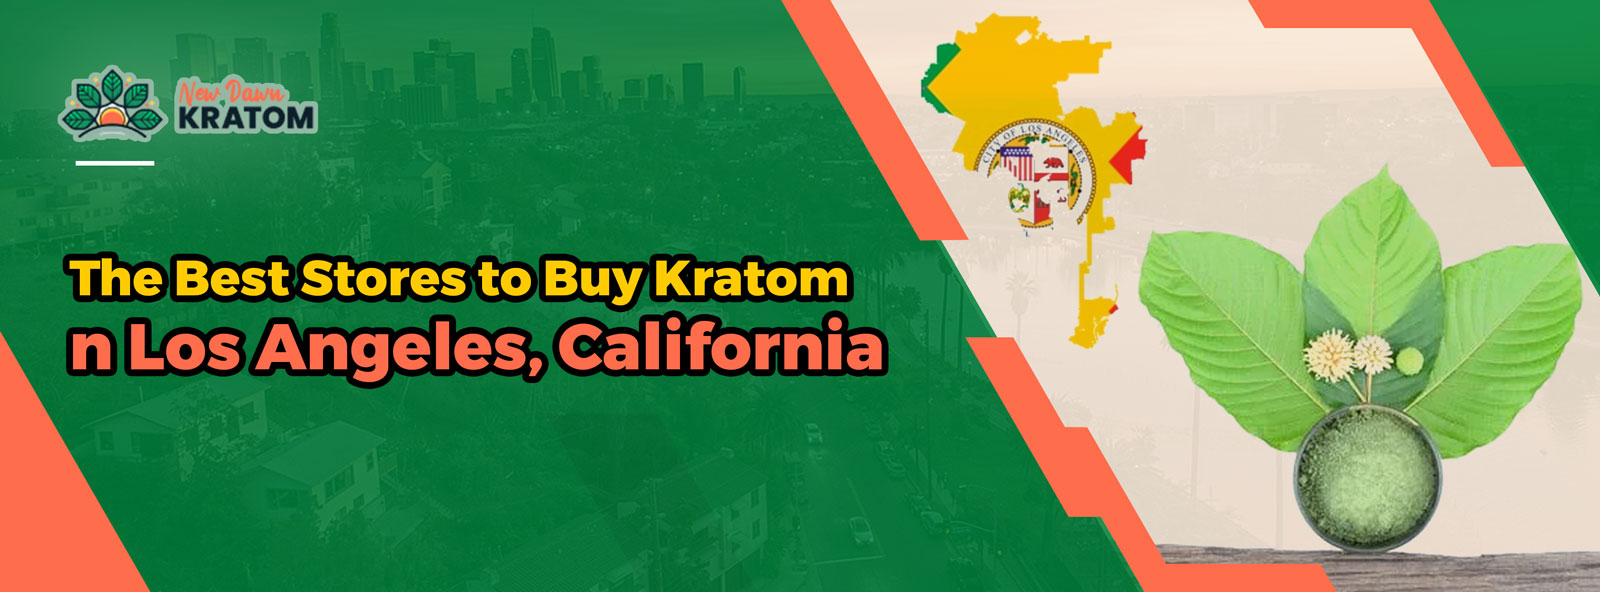 Where to Buy The Best Kratom in Los Angeles, California